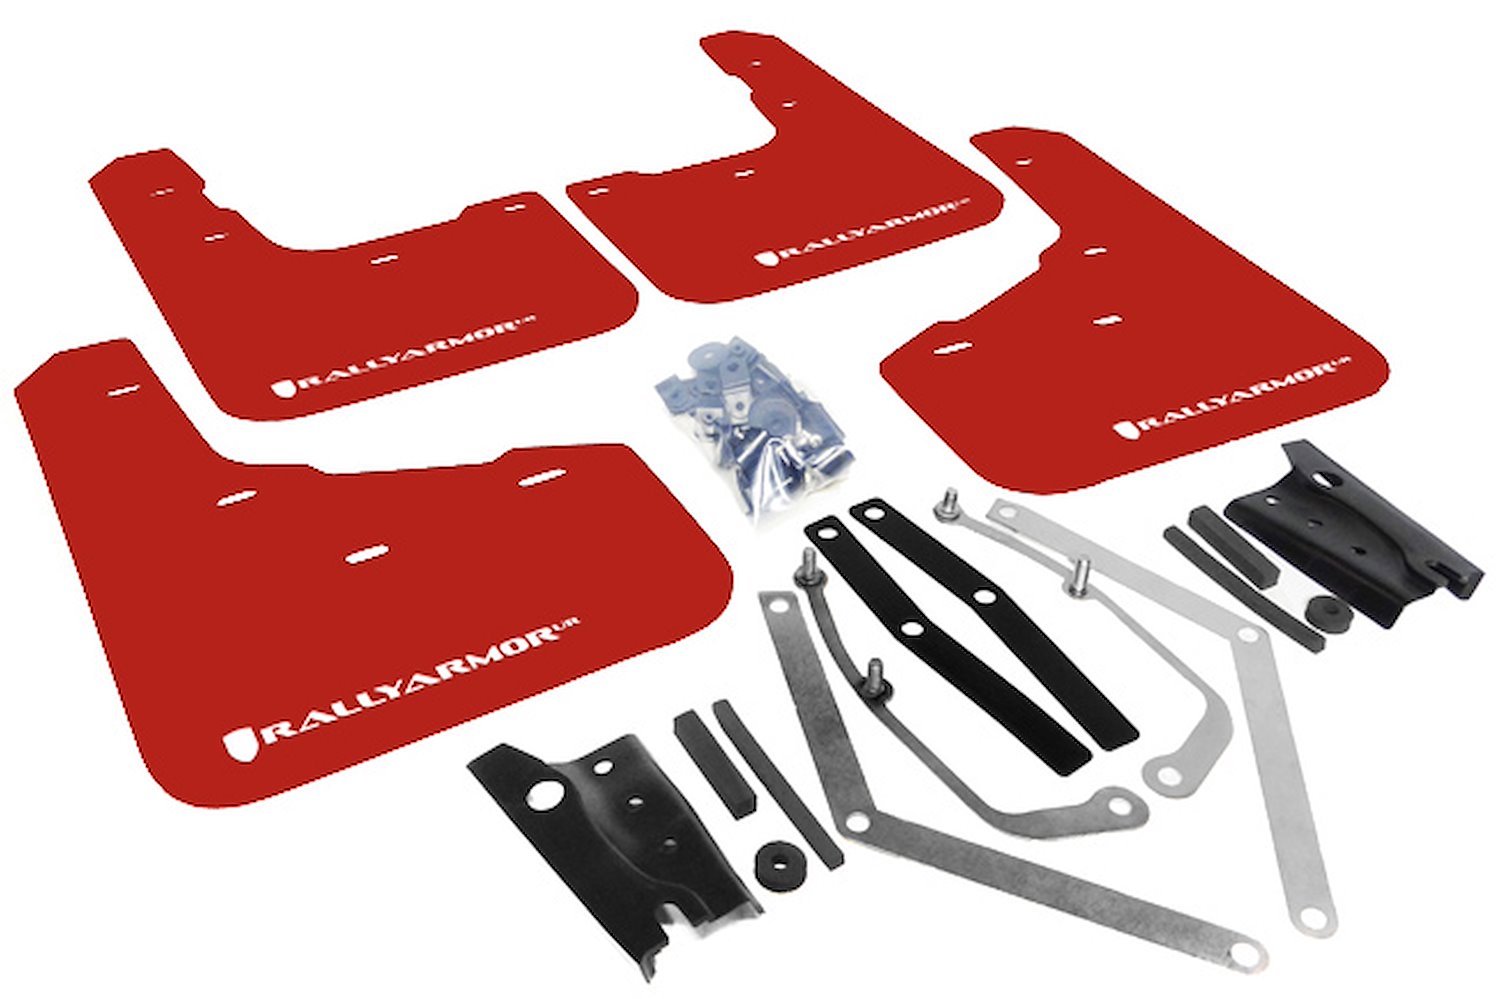 MF29URRDWH Mud Flap Kit for 2013-2019 Ford Fiesta ST - Red Mud Flap/White Logo